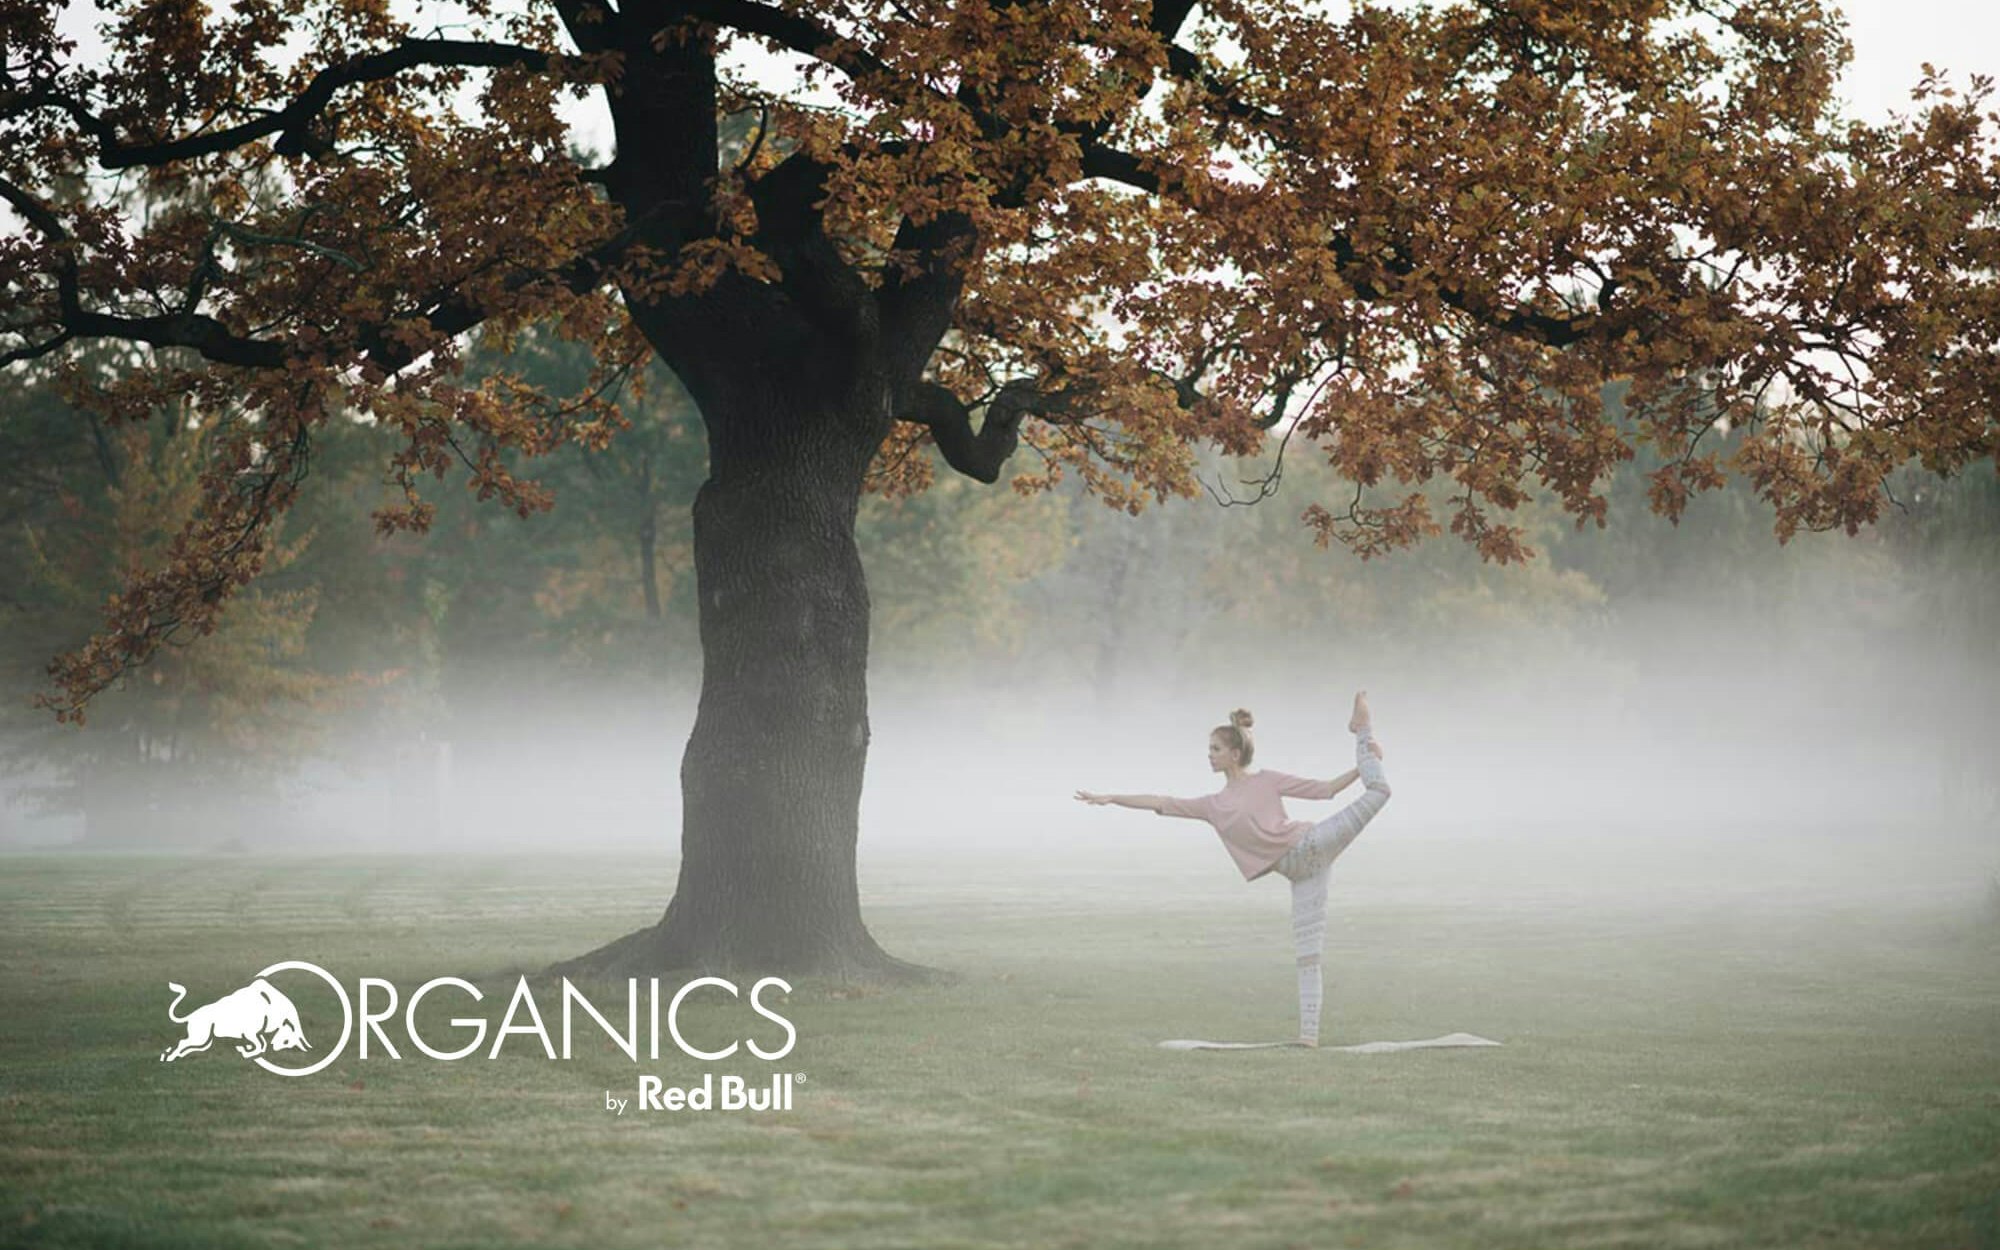 Red Bull Organics